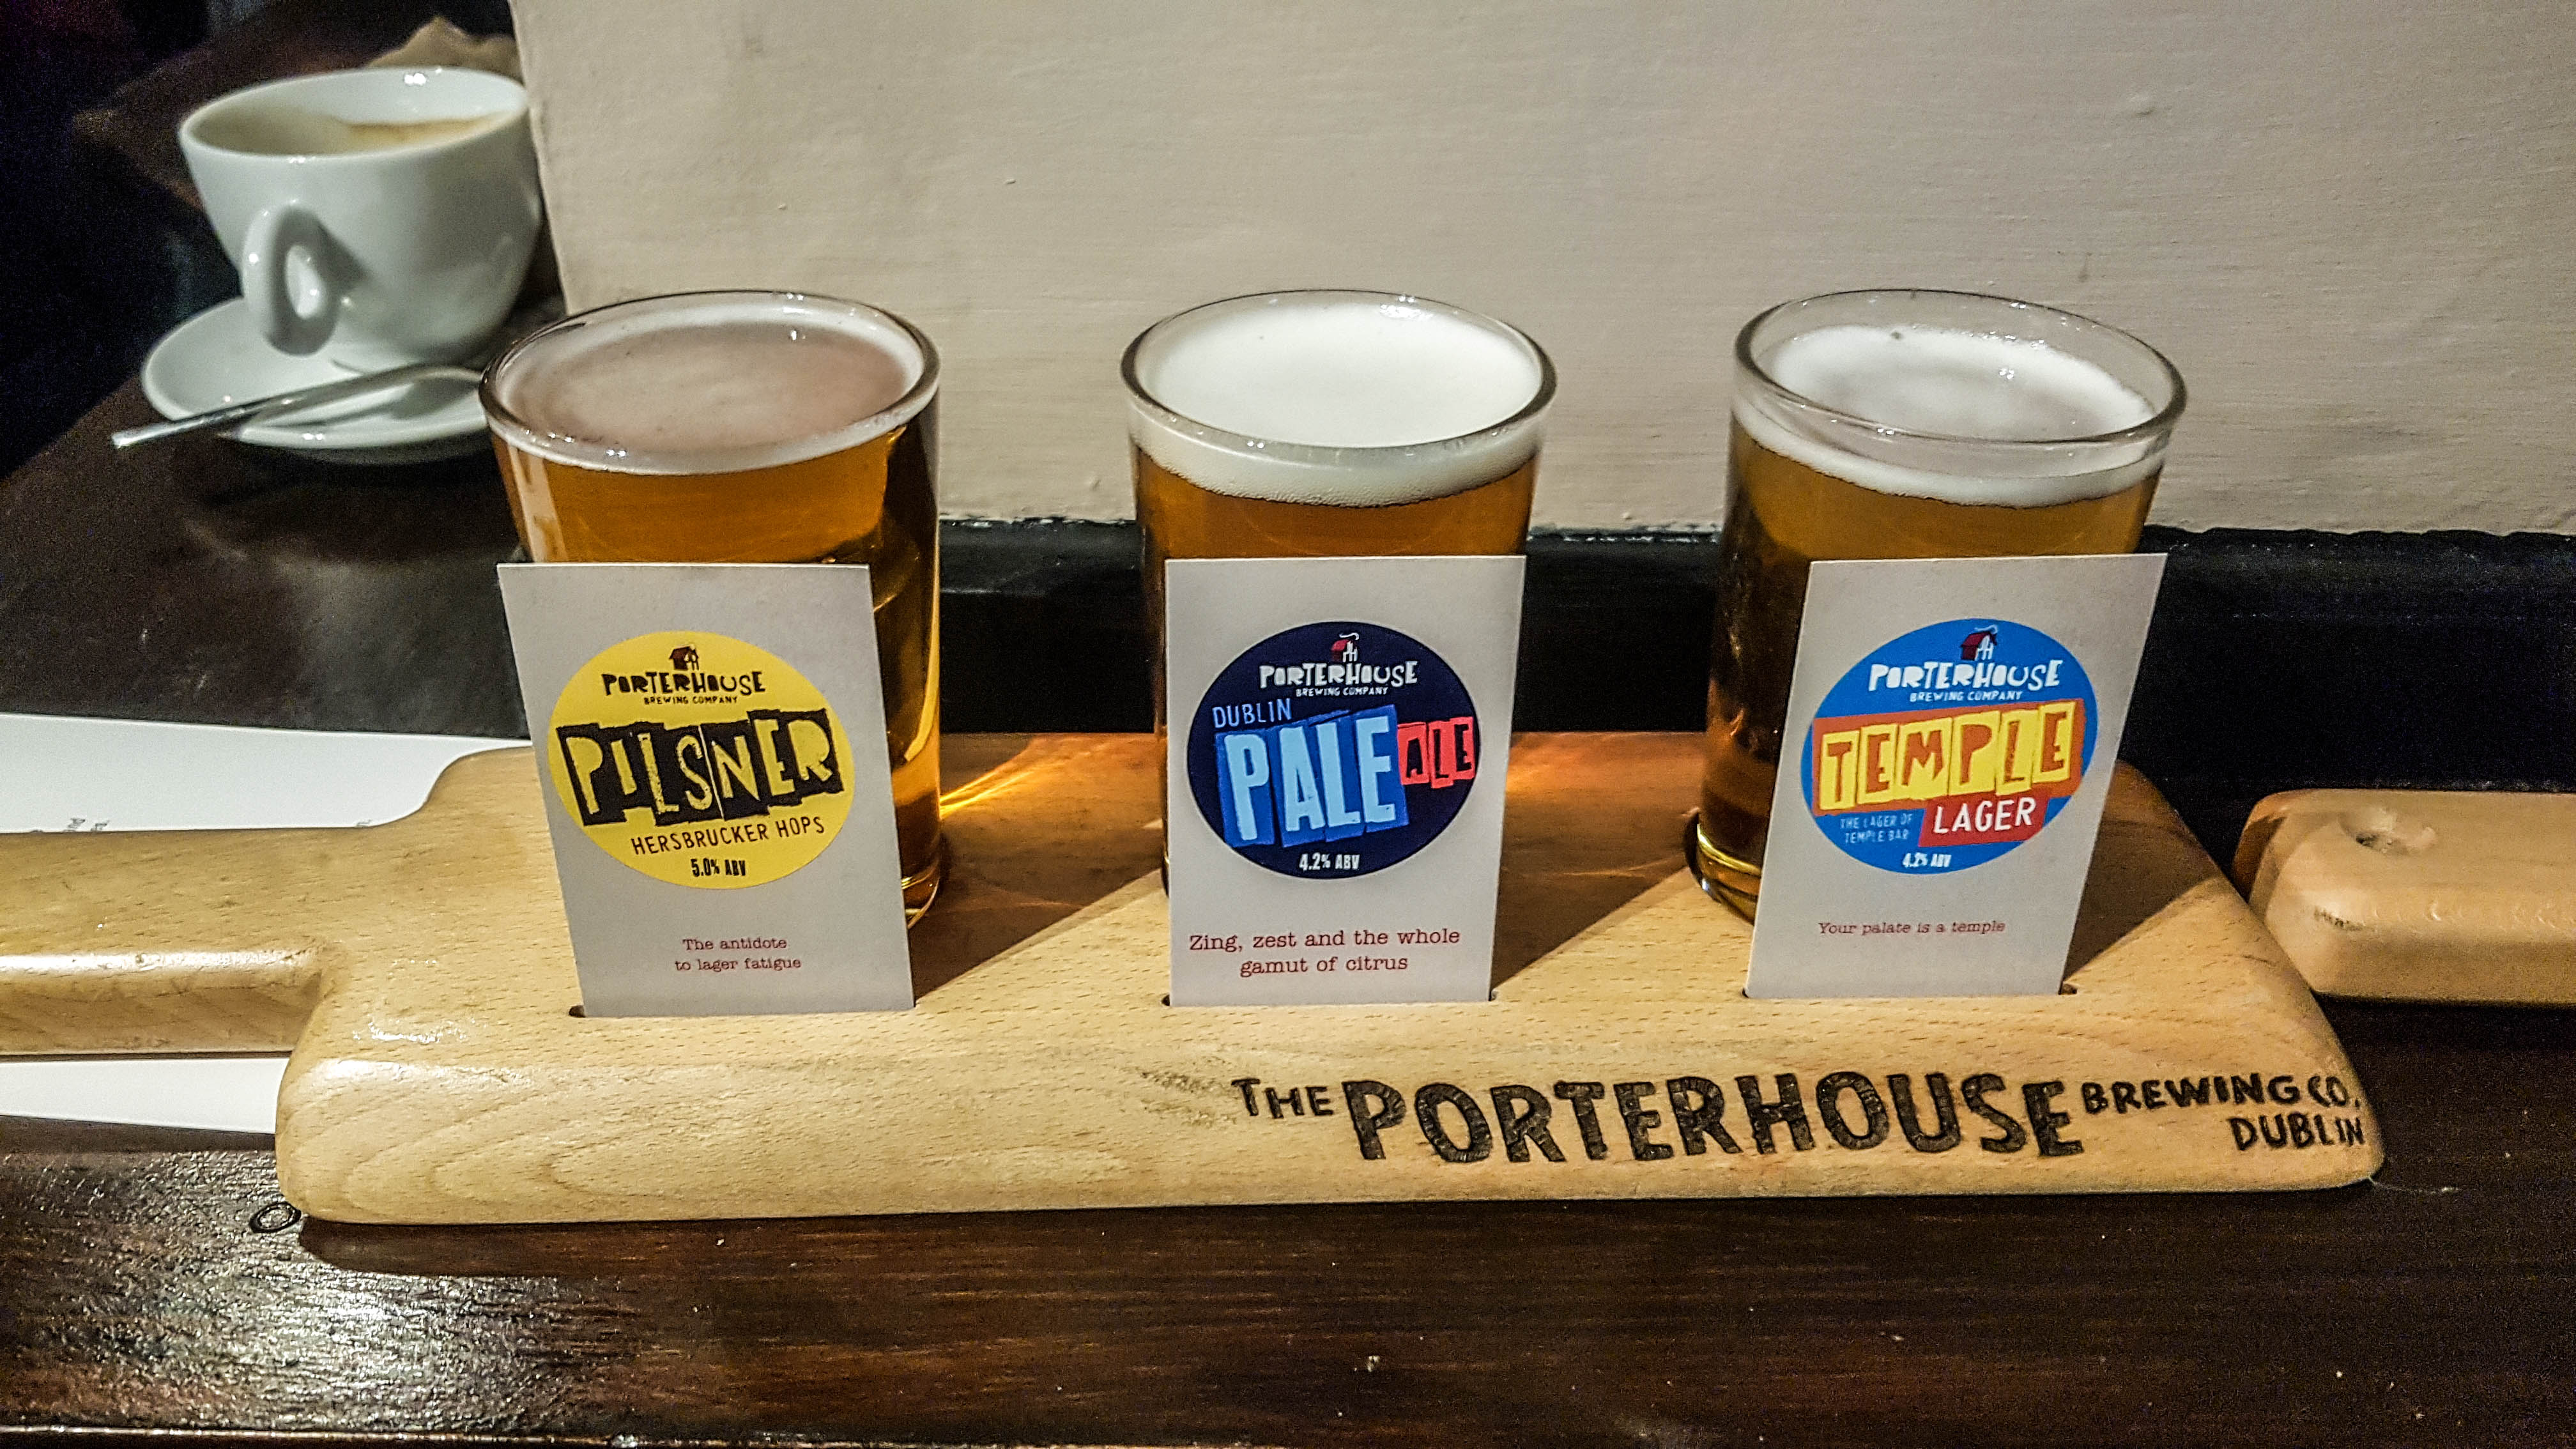 Paddle de 3 cervezas artesanas en The Porterhouse Central, Dublín, Irlanda